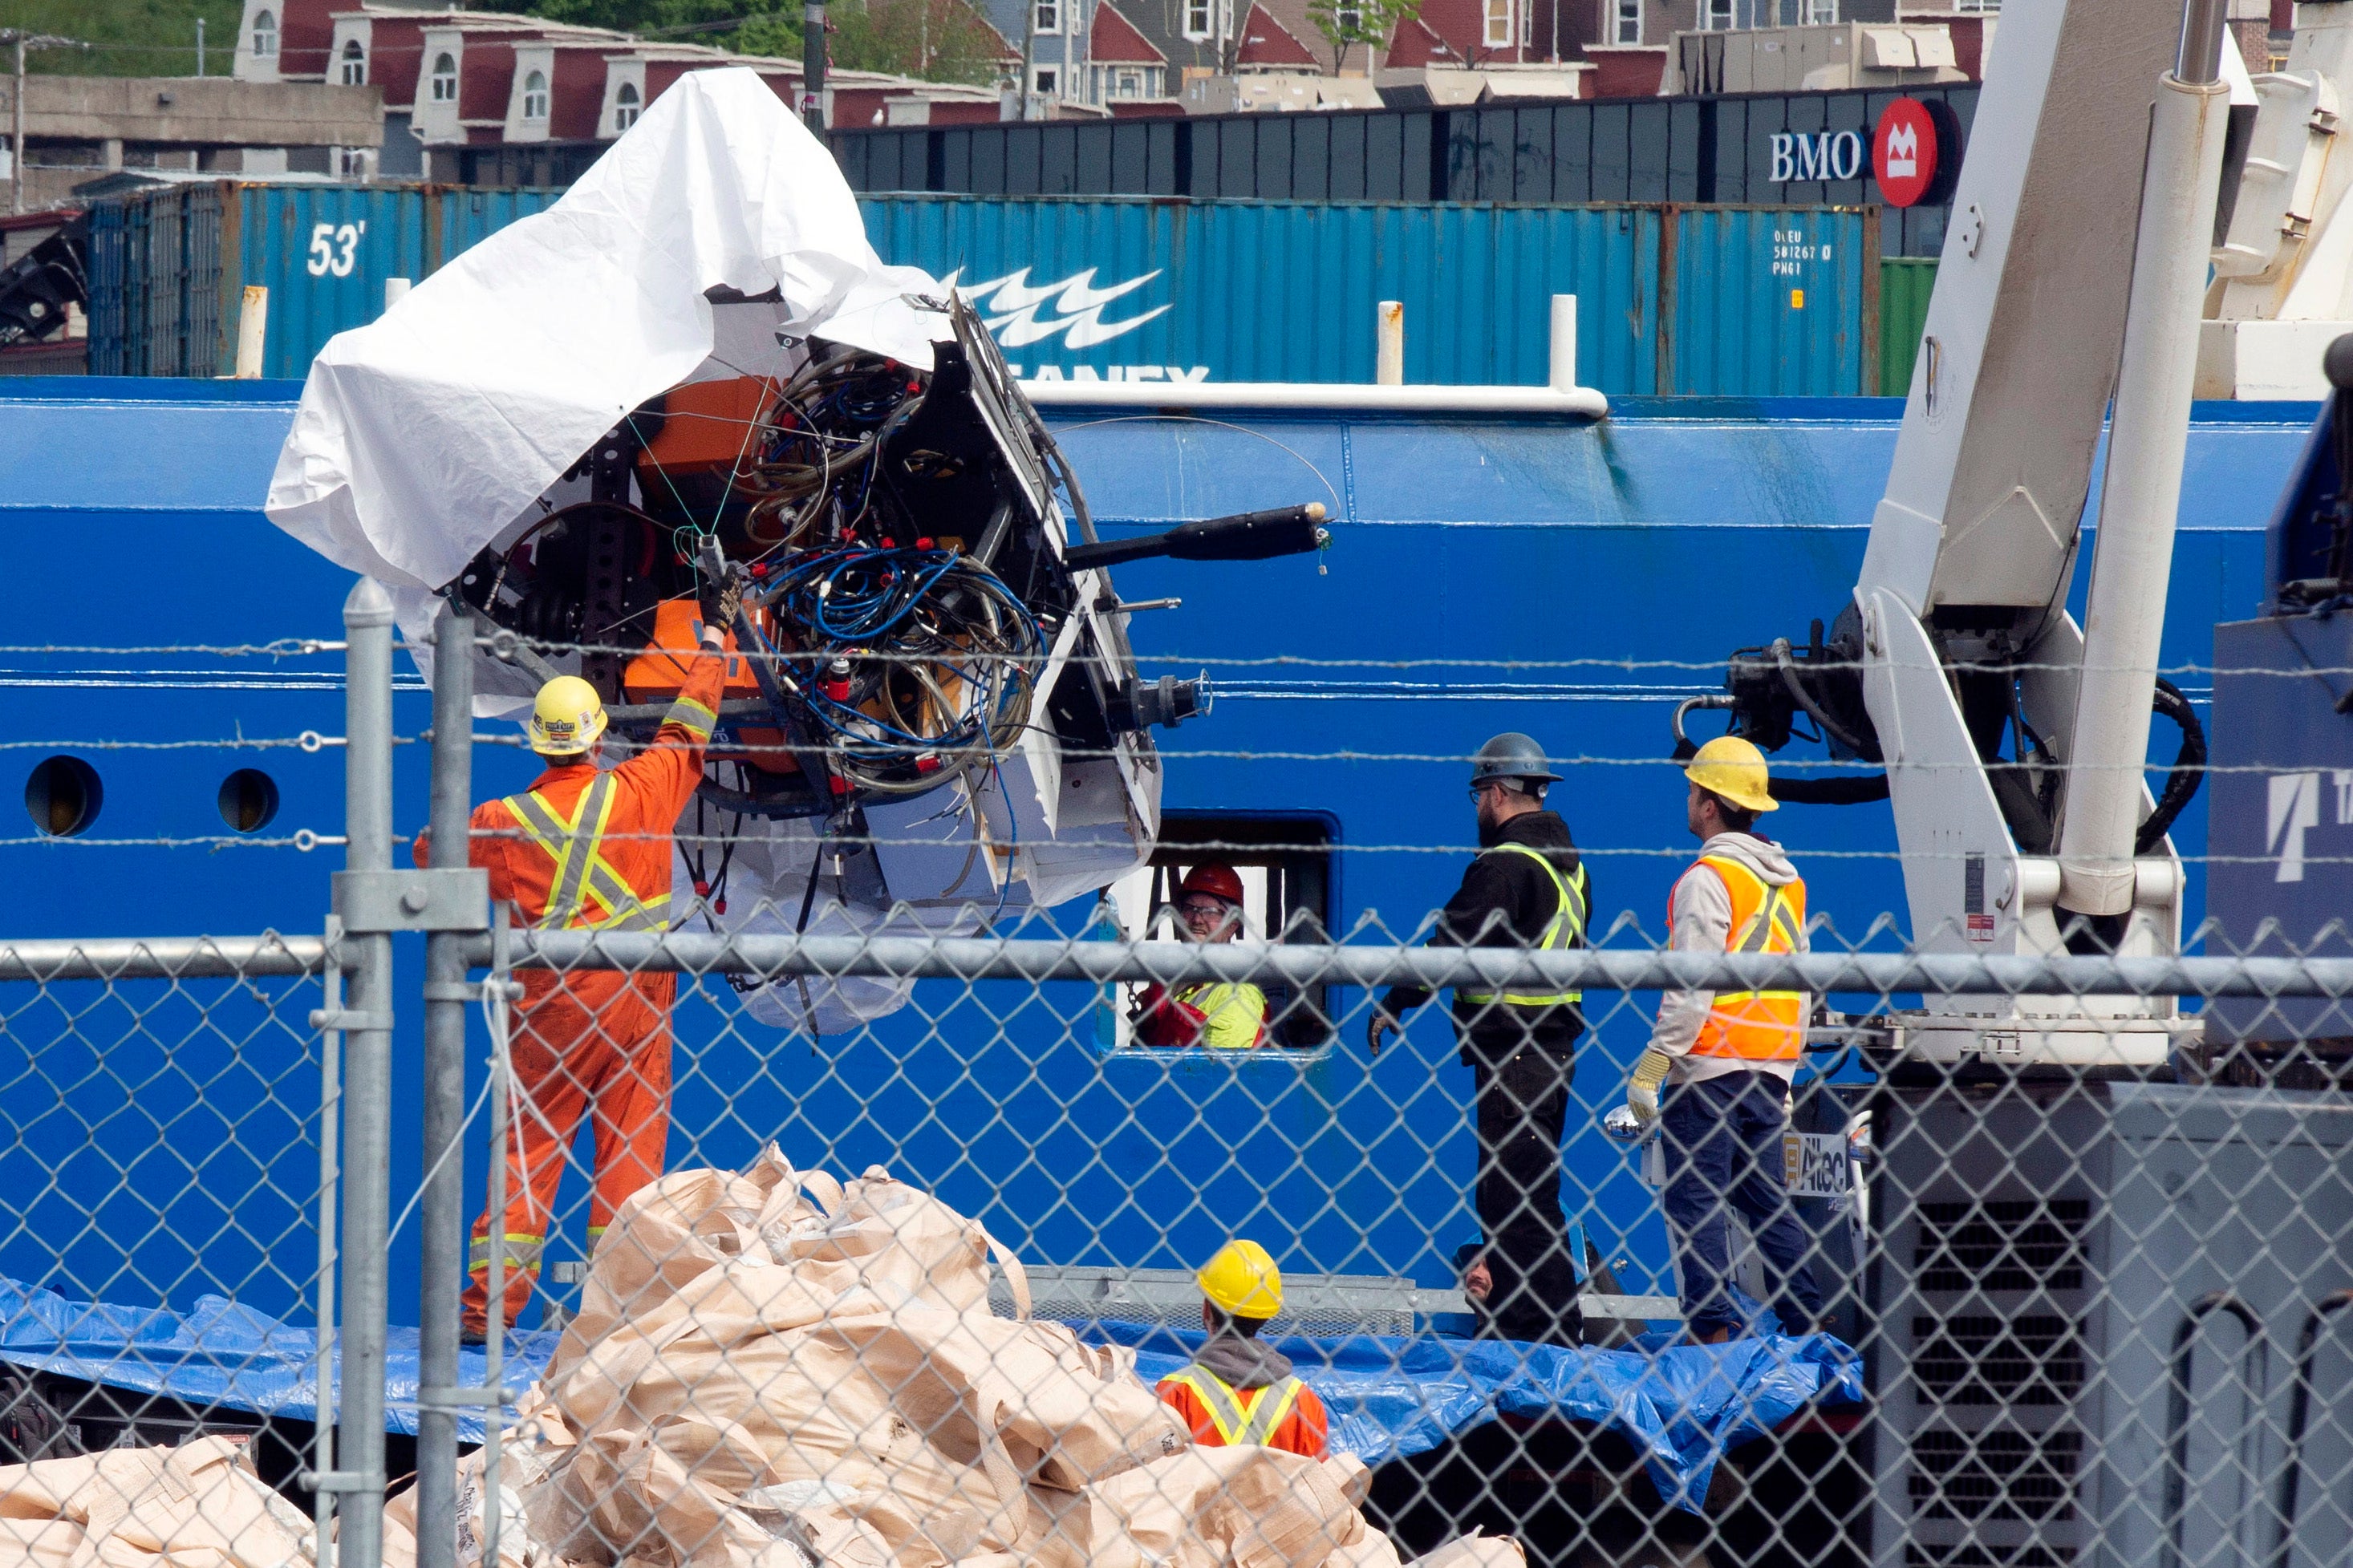 Debris from Titan sub unloaded in Newfoundland, Canada